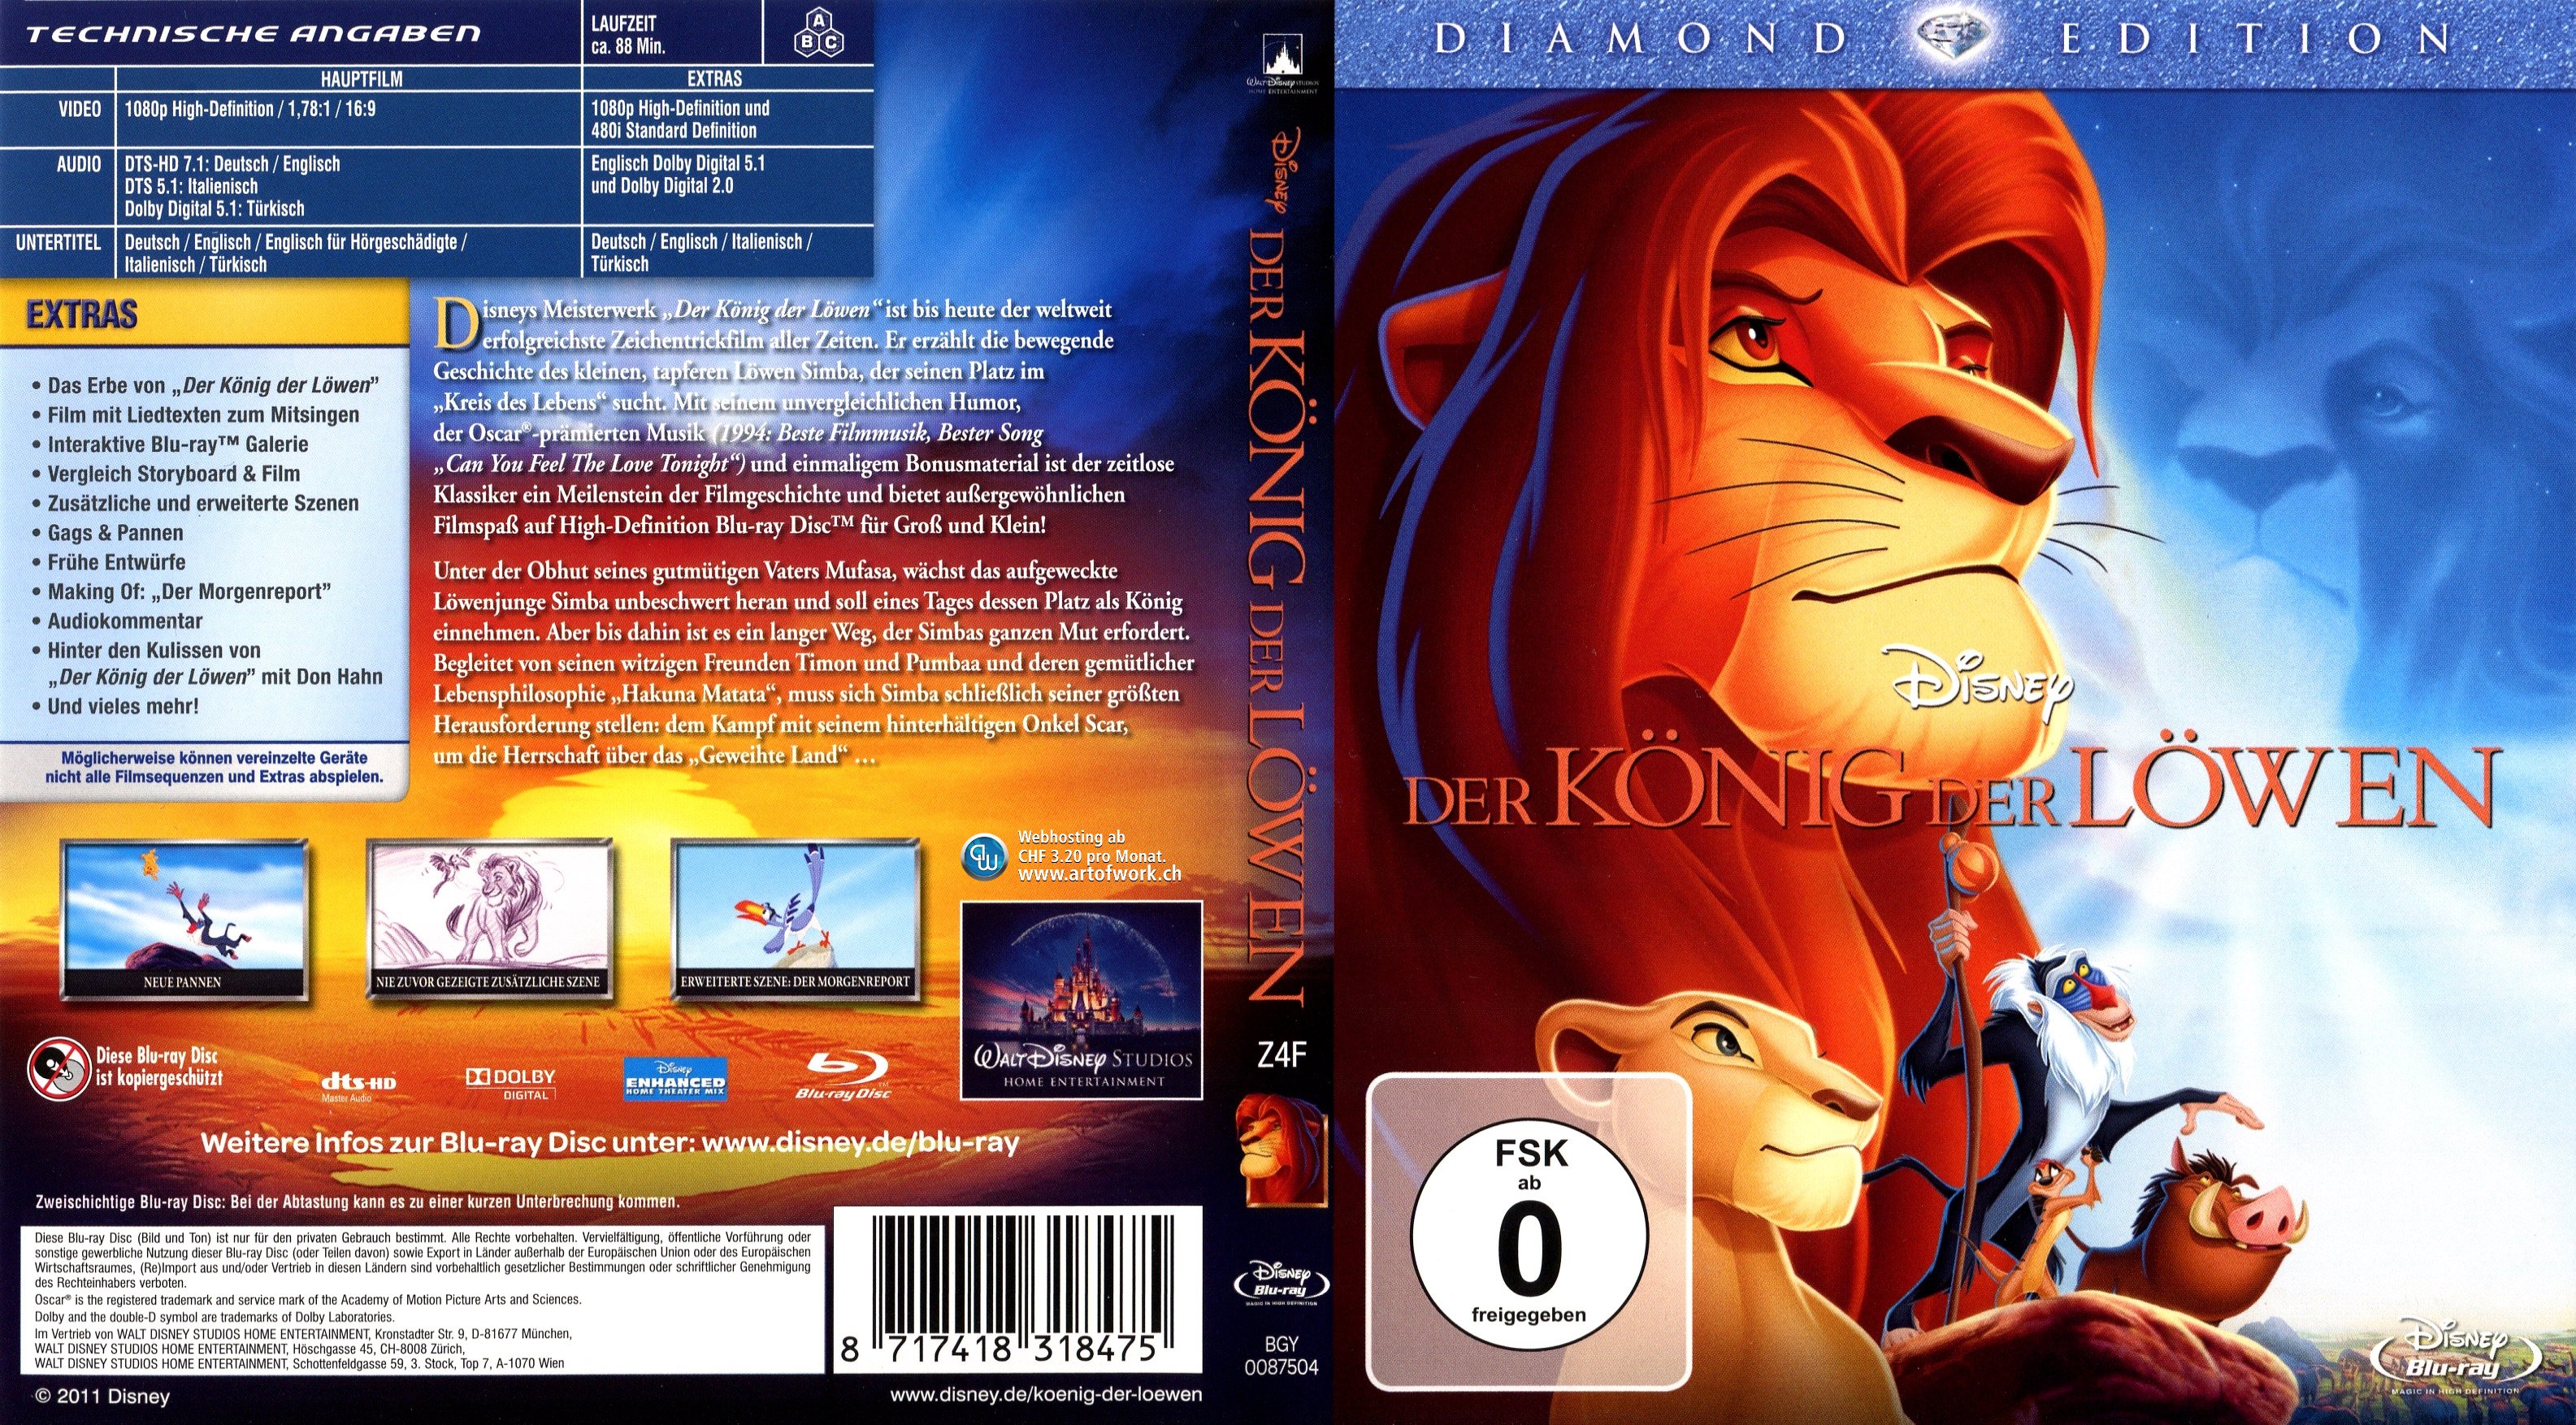 Koenig der Loewen 1 Lion King Diamond Edition | Blu-Ray Covers | Cover ...